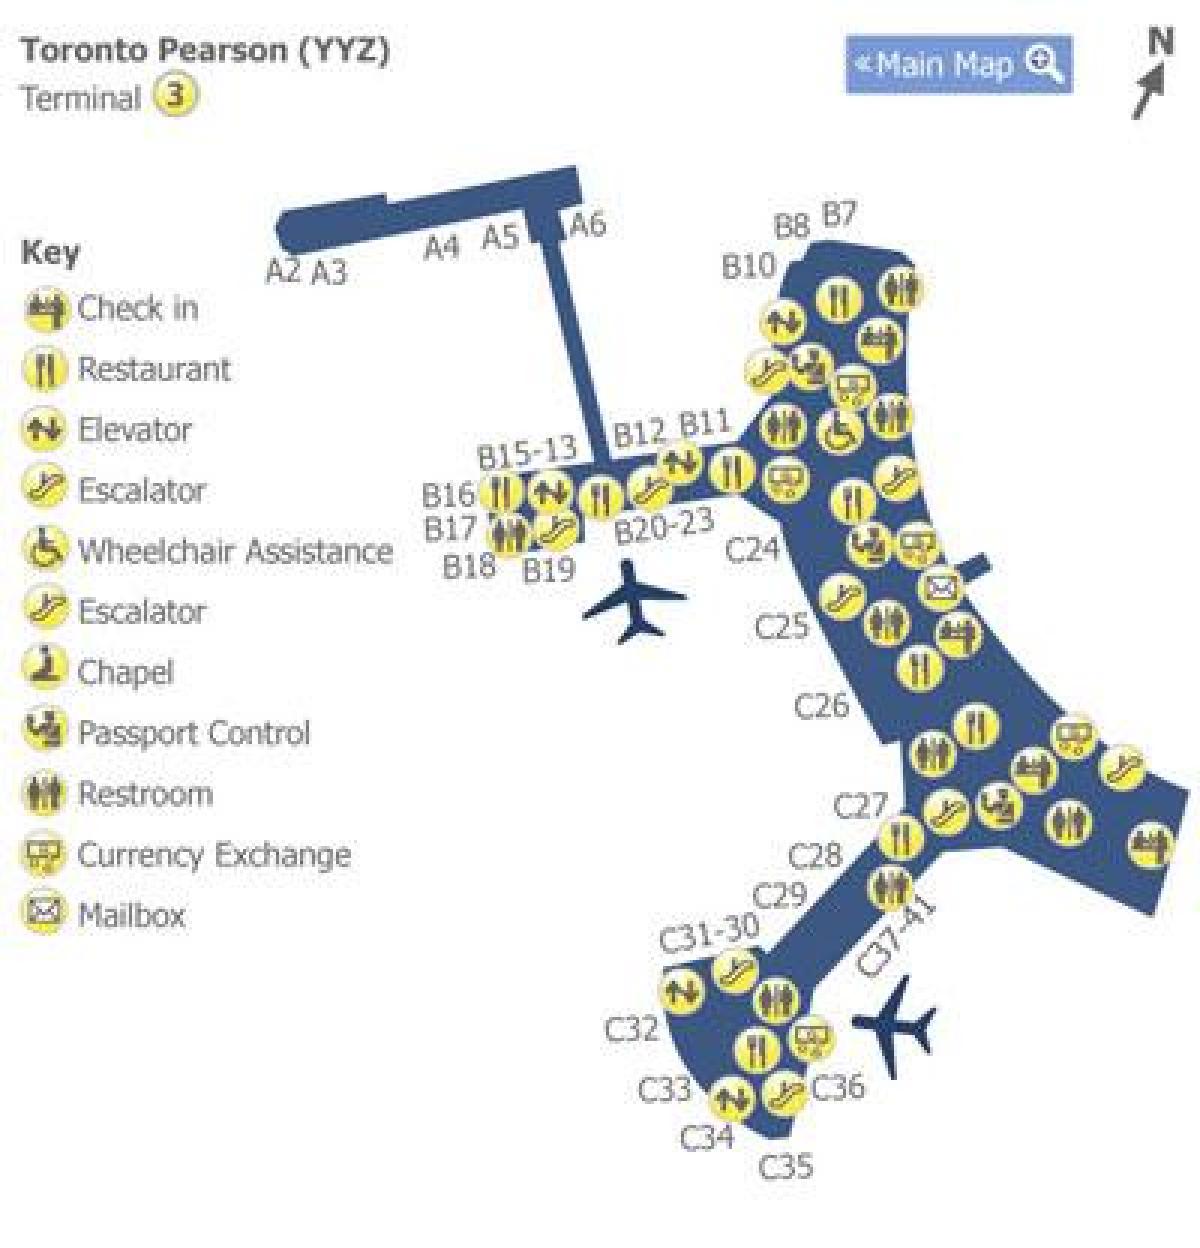 Map of Toronto Pearson airport terminal 3